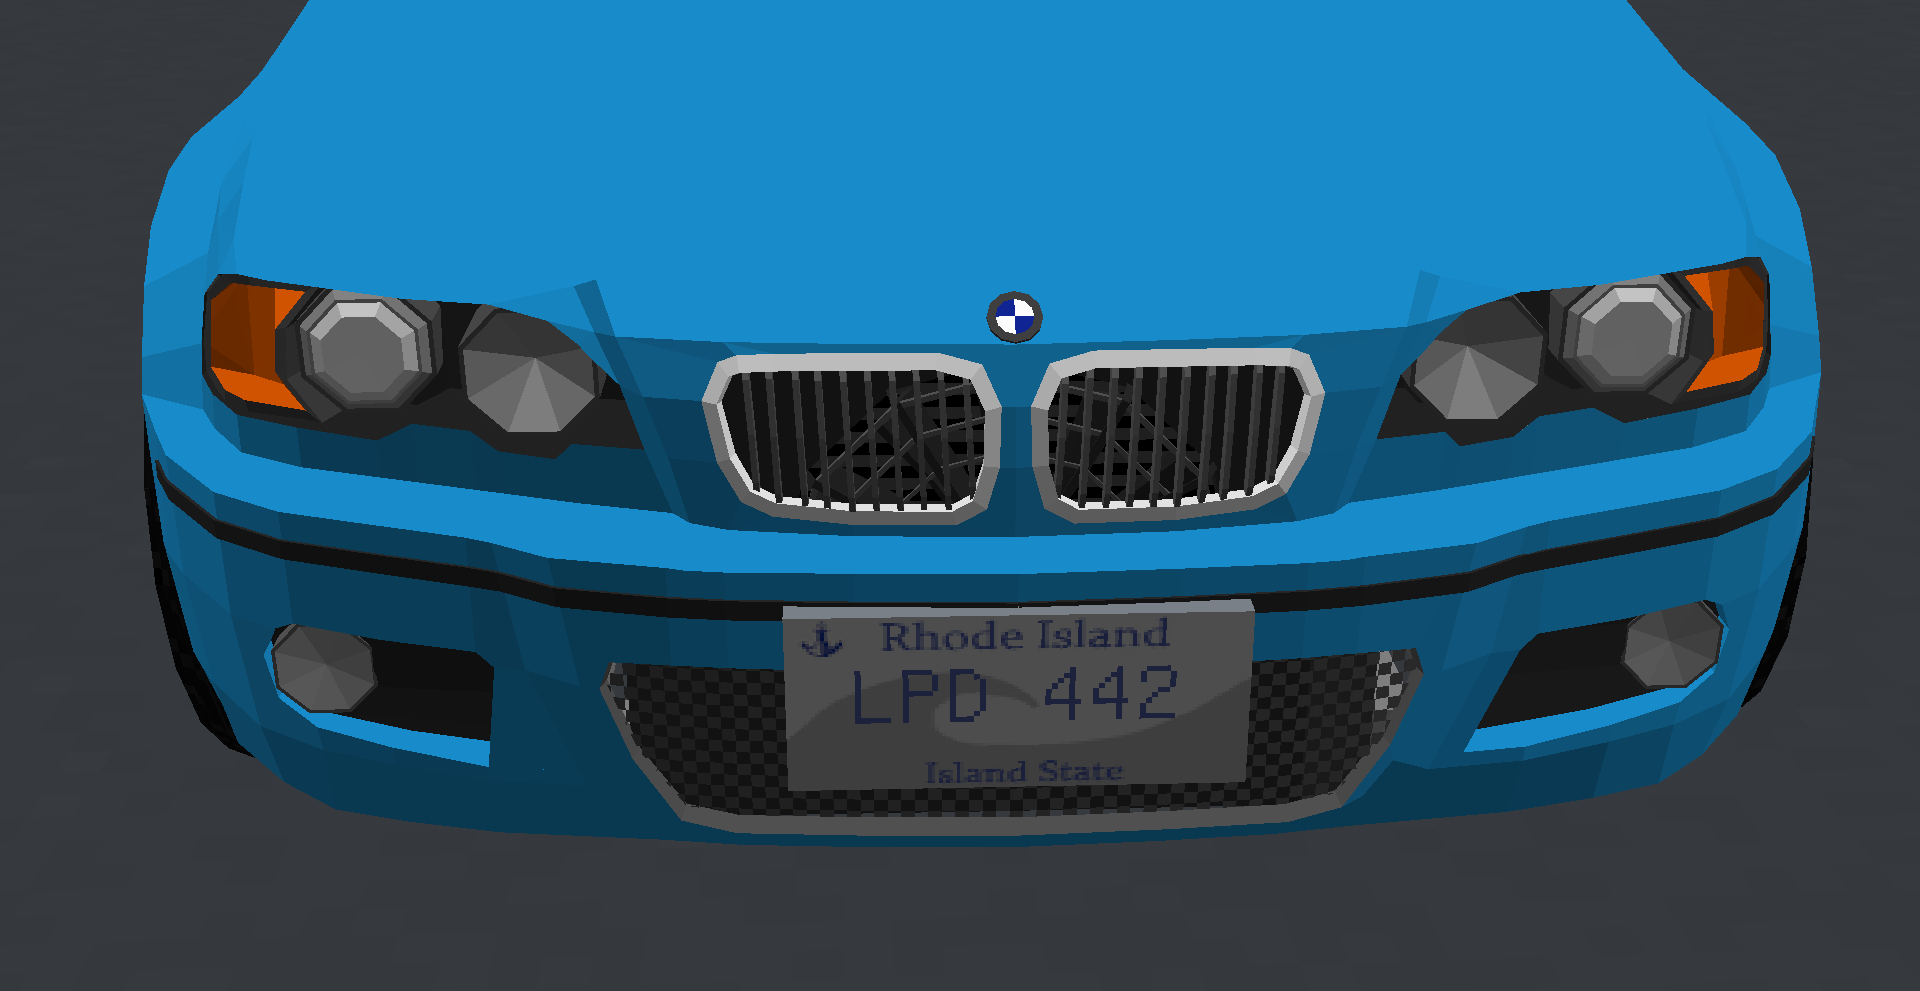 BMW E46 with a Rhode Island plate